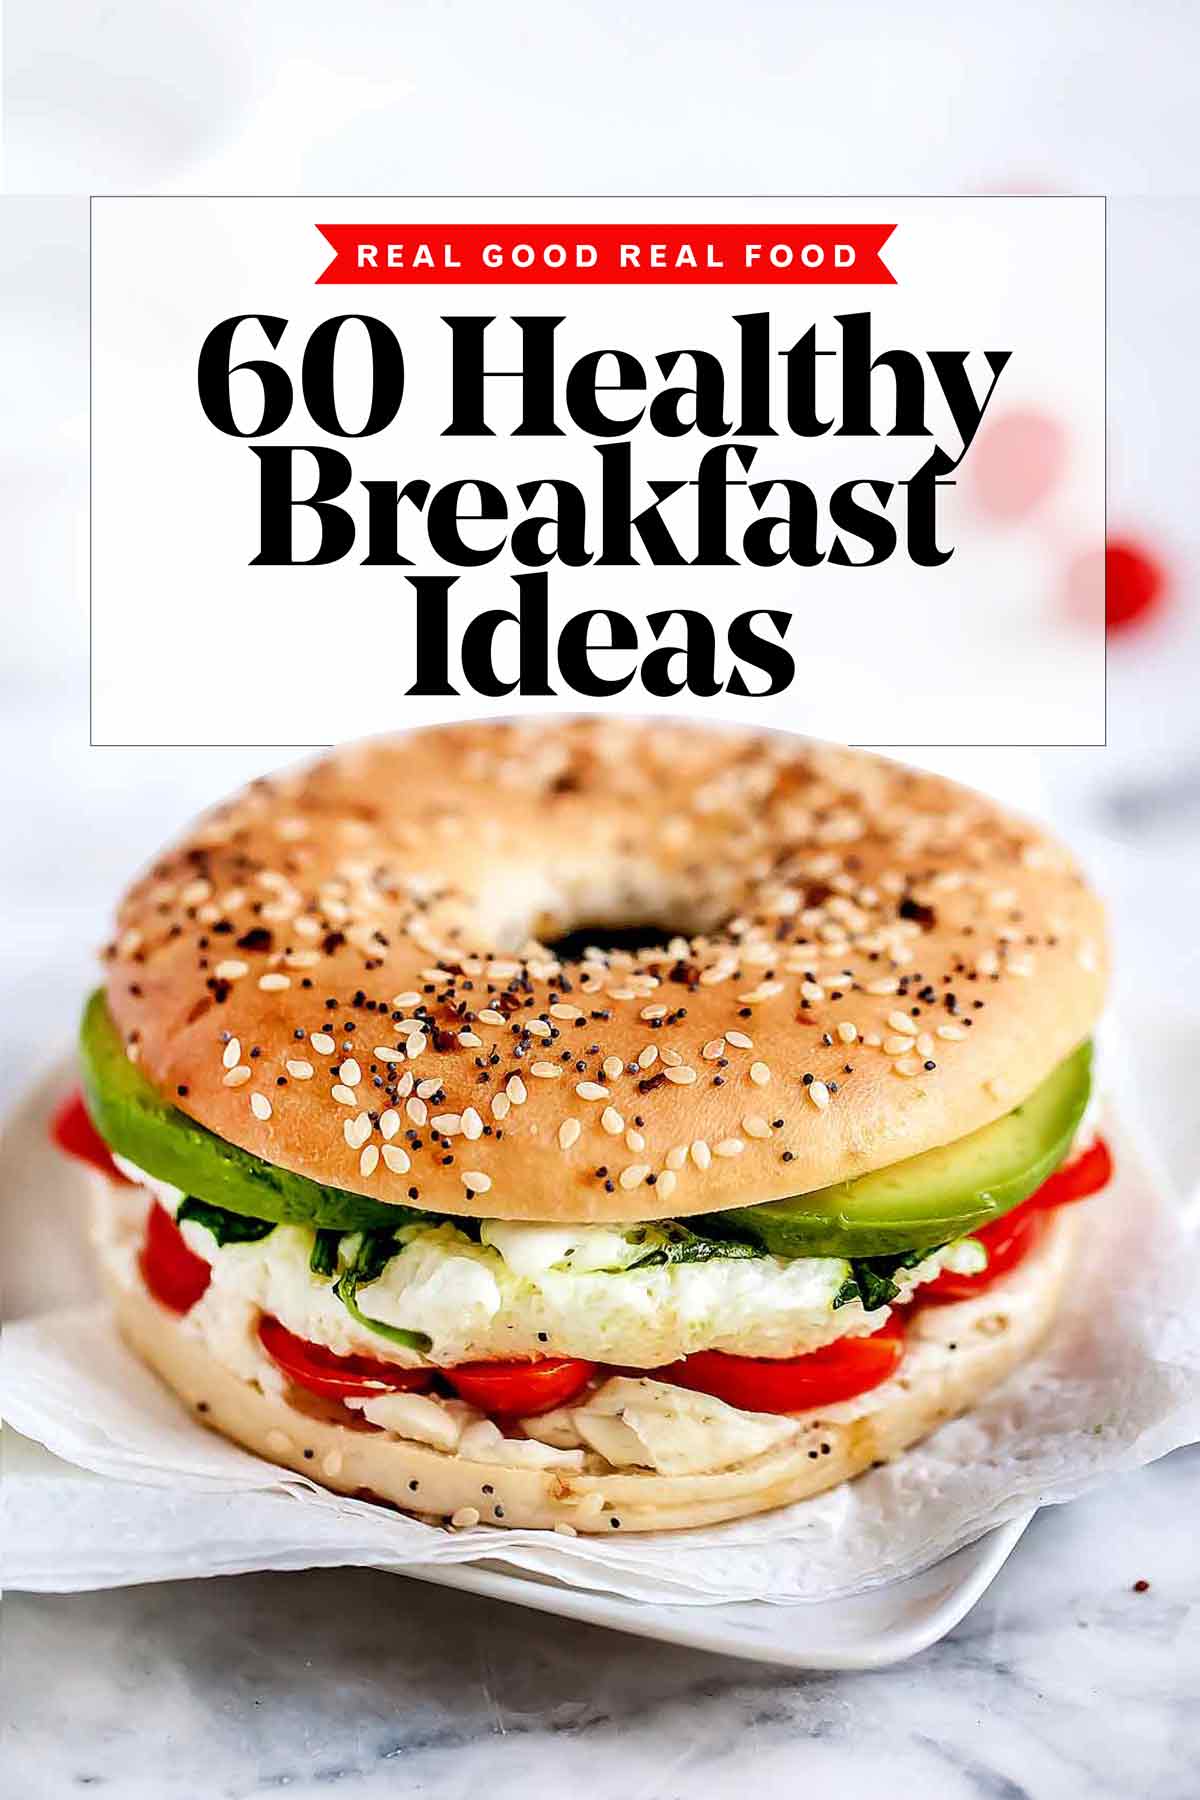 https://www.foodiecrush.com/wp-content/uploads/2016/10/60-Healthy-Breakfast-Ideas-foodiecrush.com_.jpg